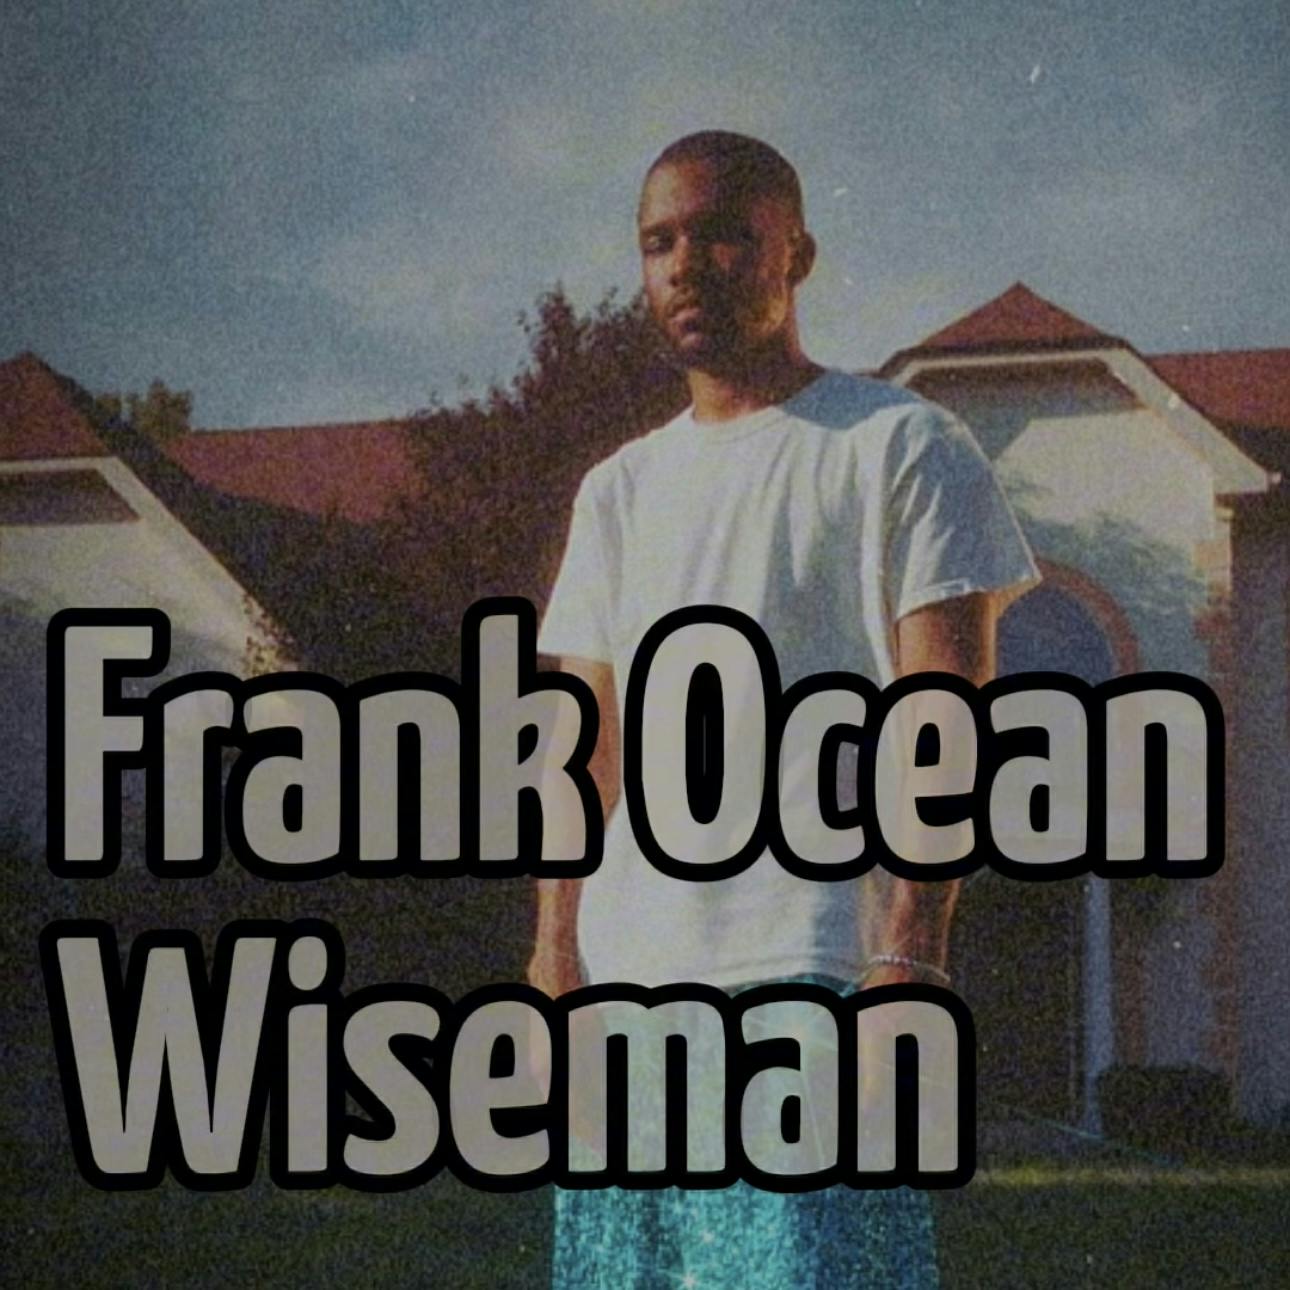 Frank Ocean - Wiseman (Sped Up)